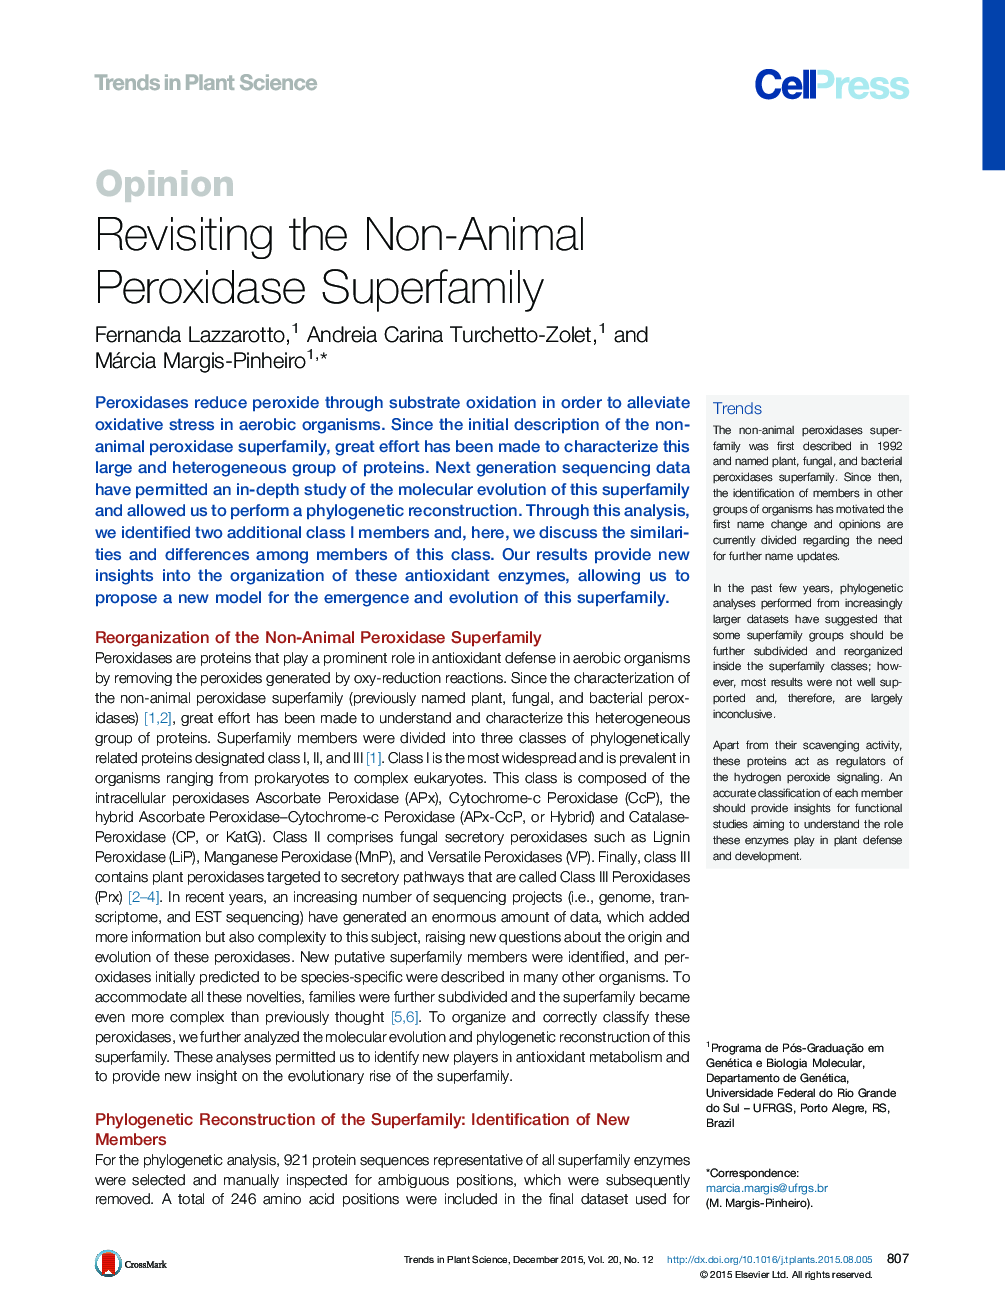 Revisiting the Non-Animal Peroxidase Superfamily